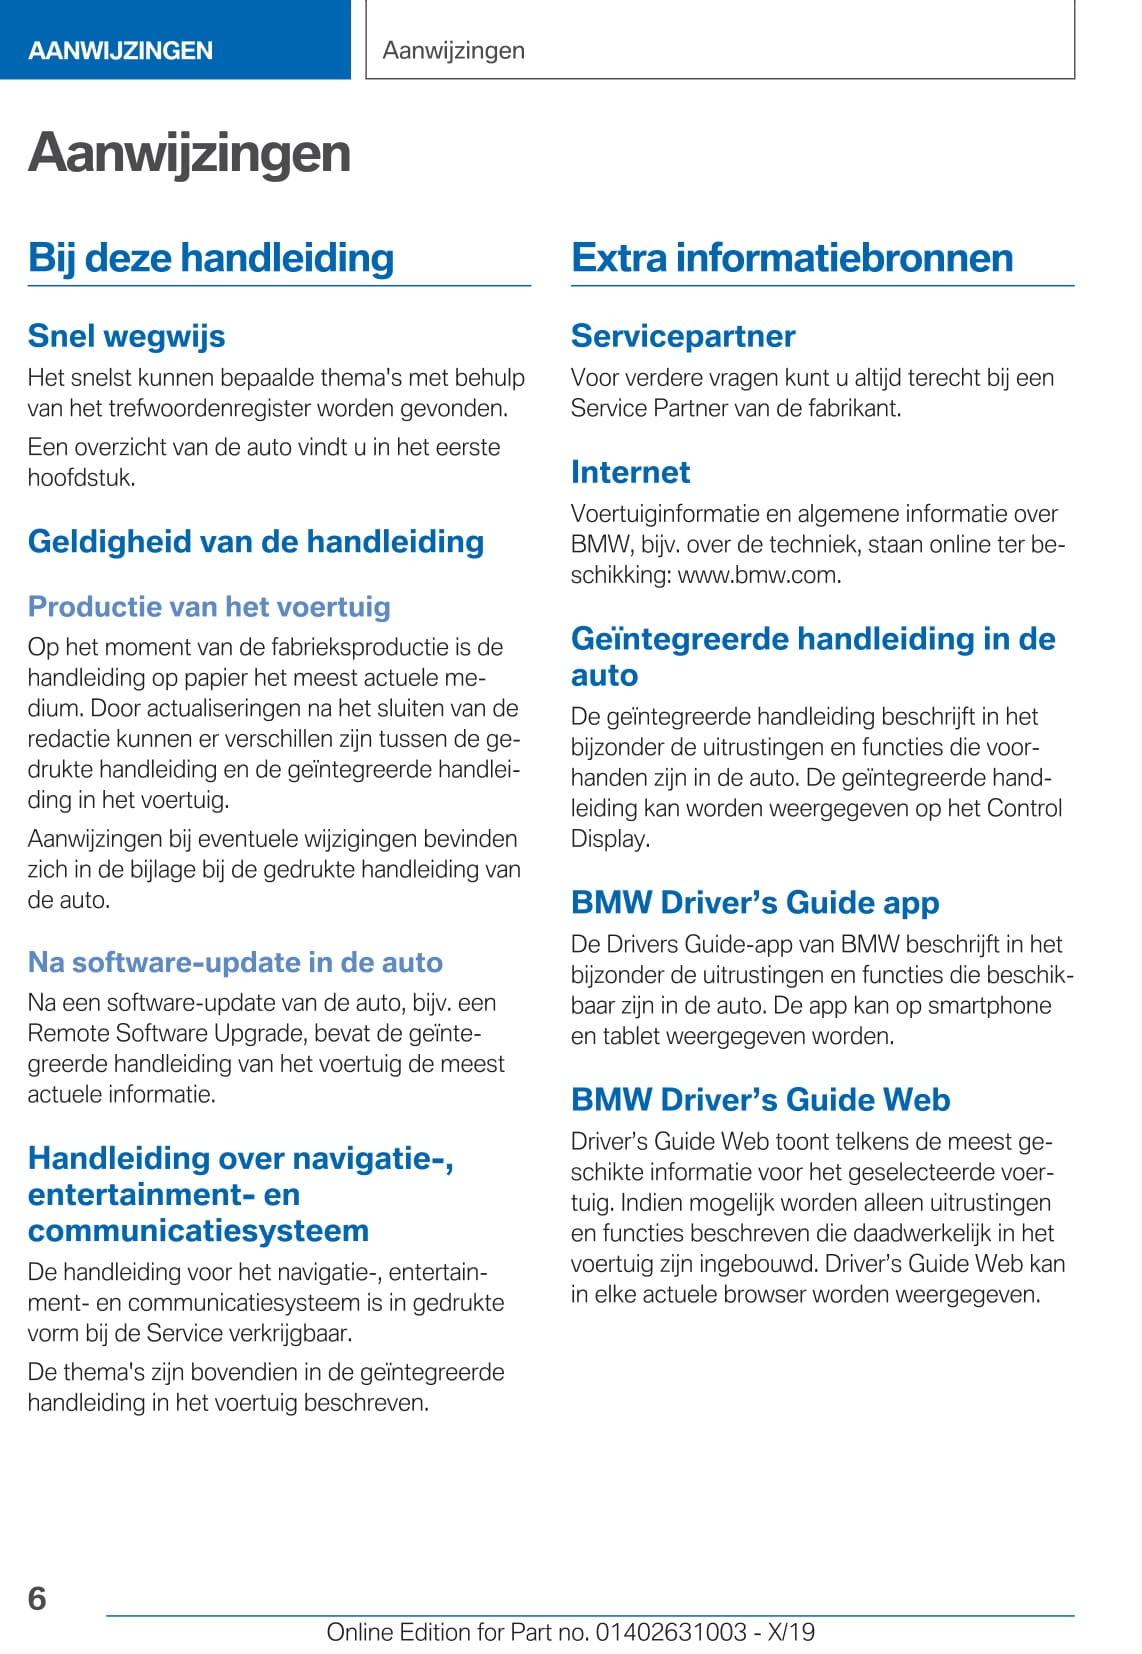 2020 BMW 2 Series Gran Coupé Owner's Manual | Dutch